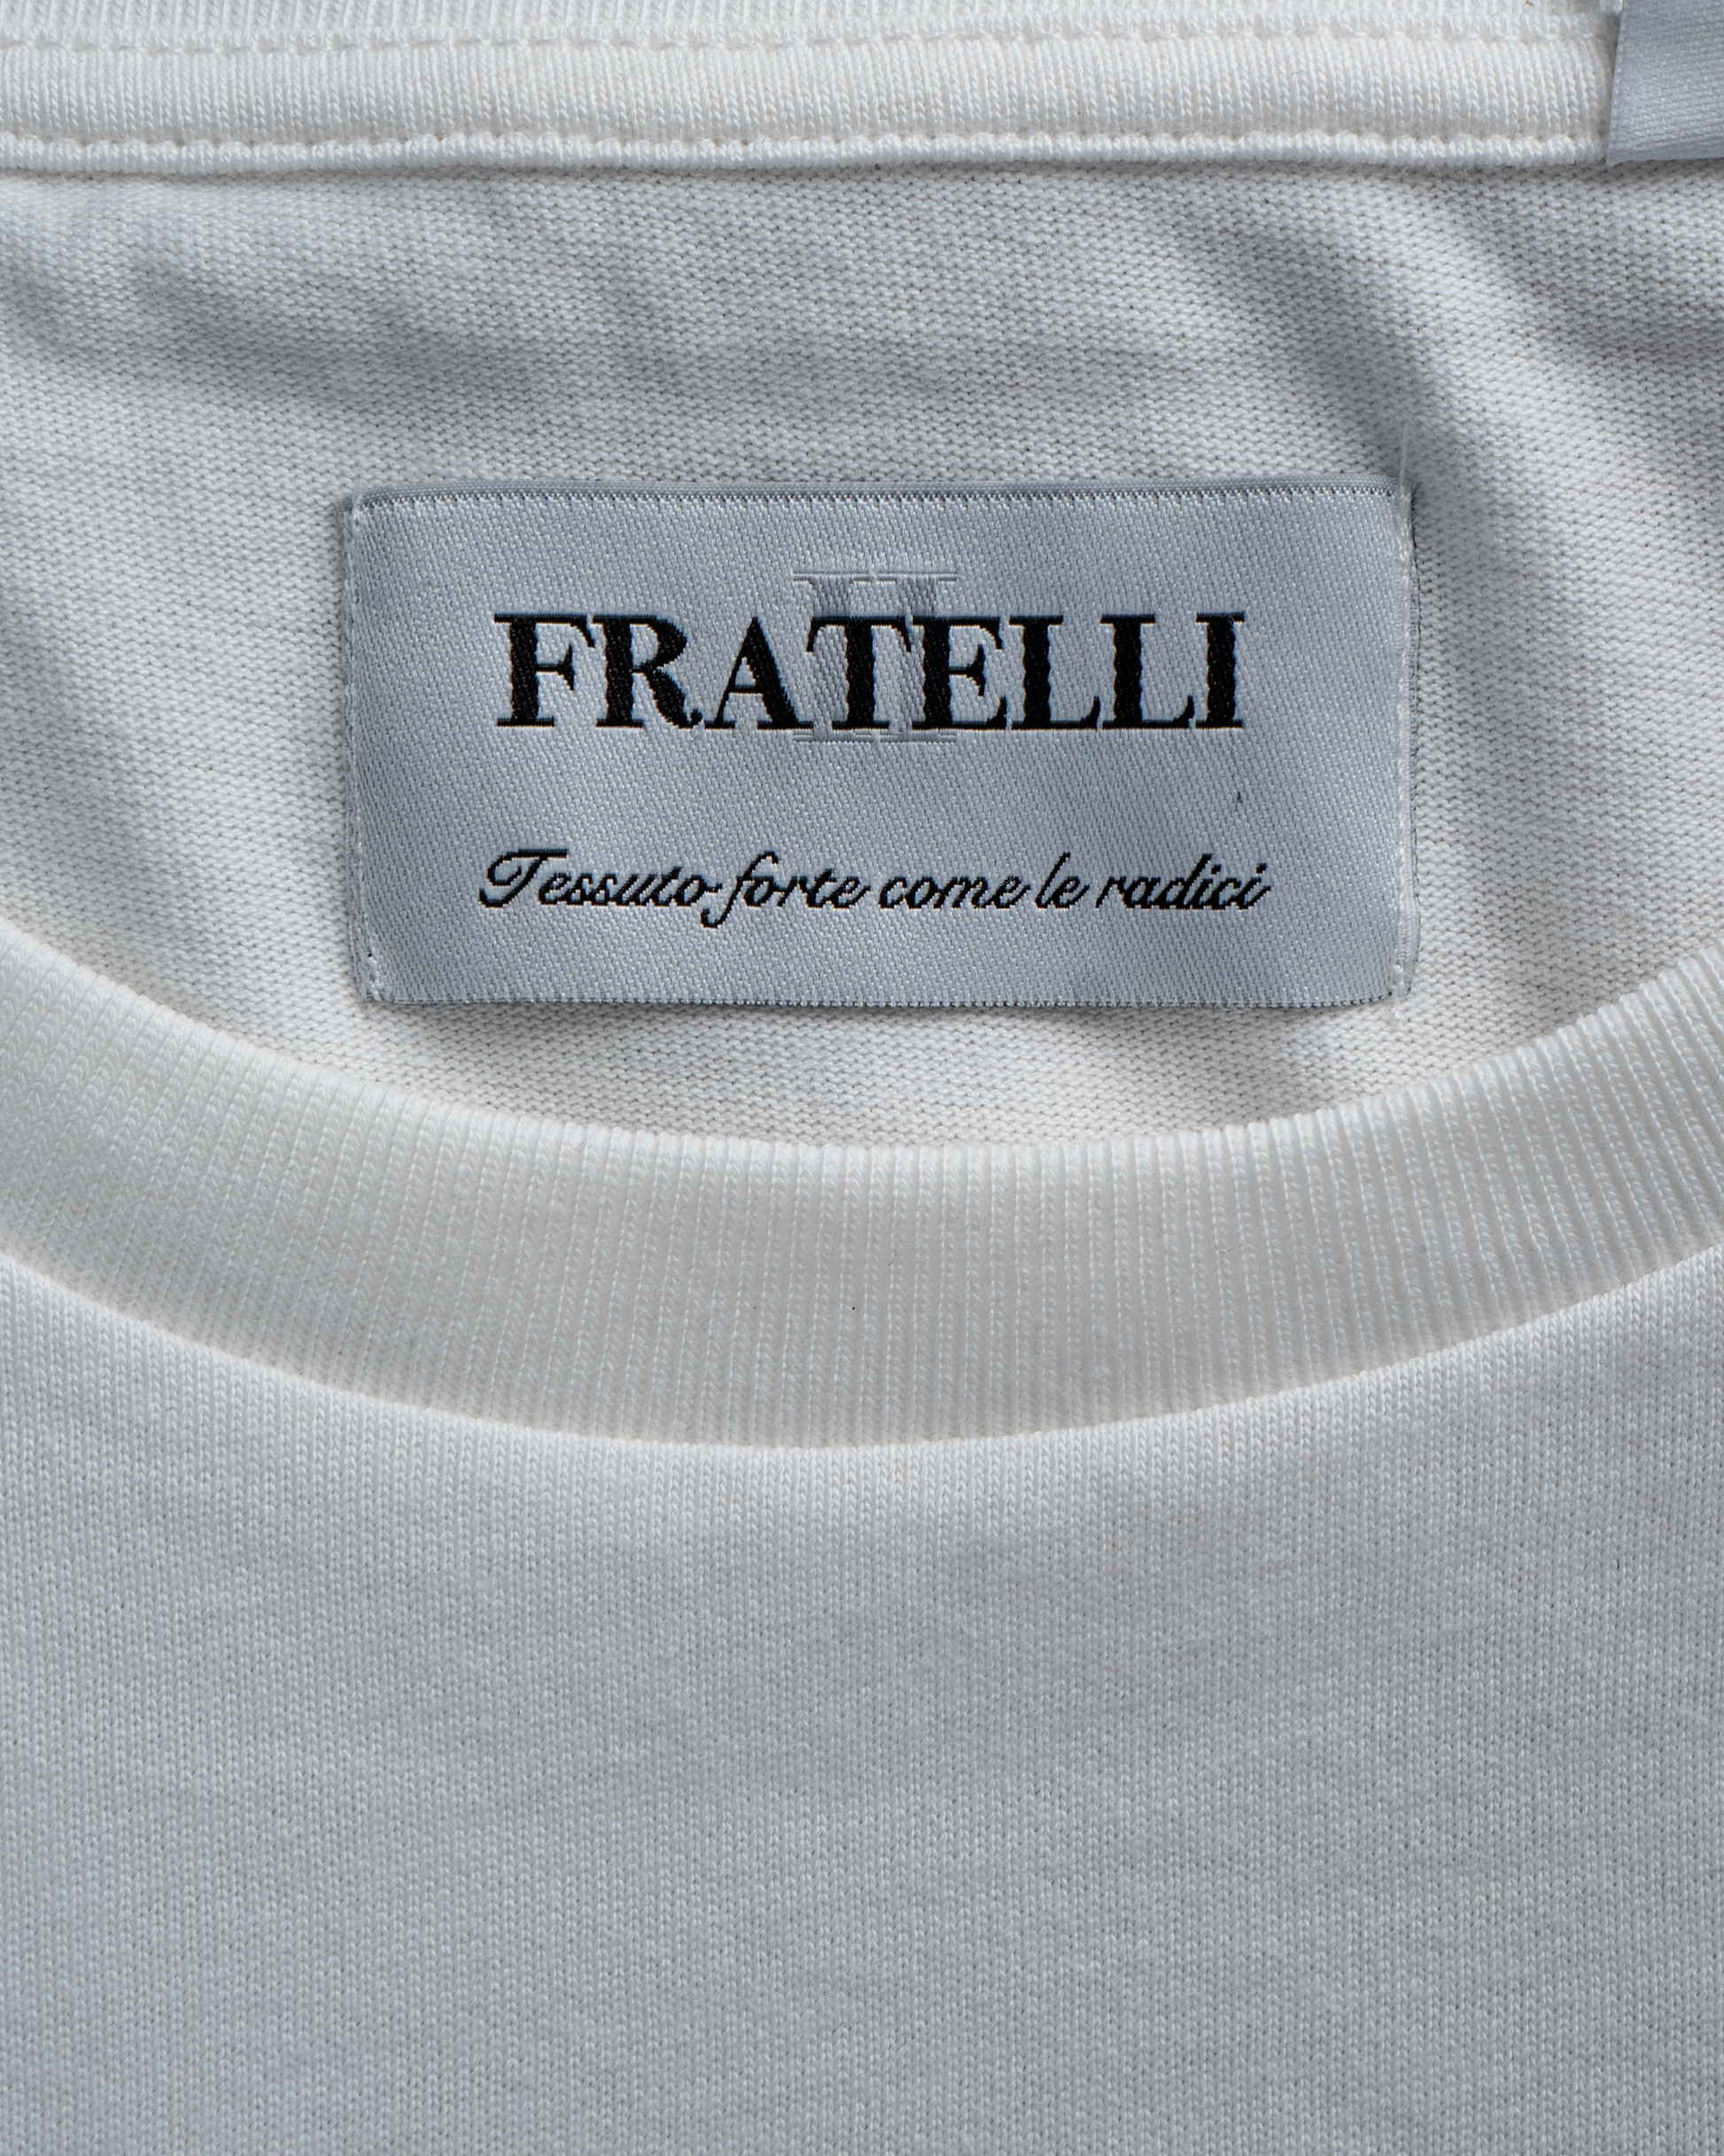 2FRATELLI Regular T-Shirt weiss women (unisex) - 2FRATELLI